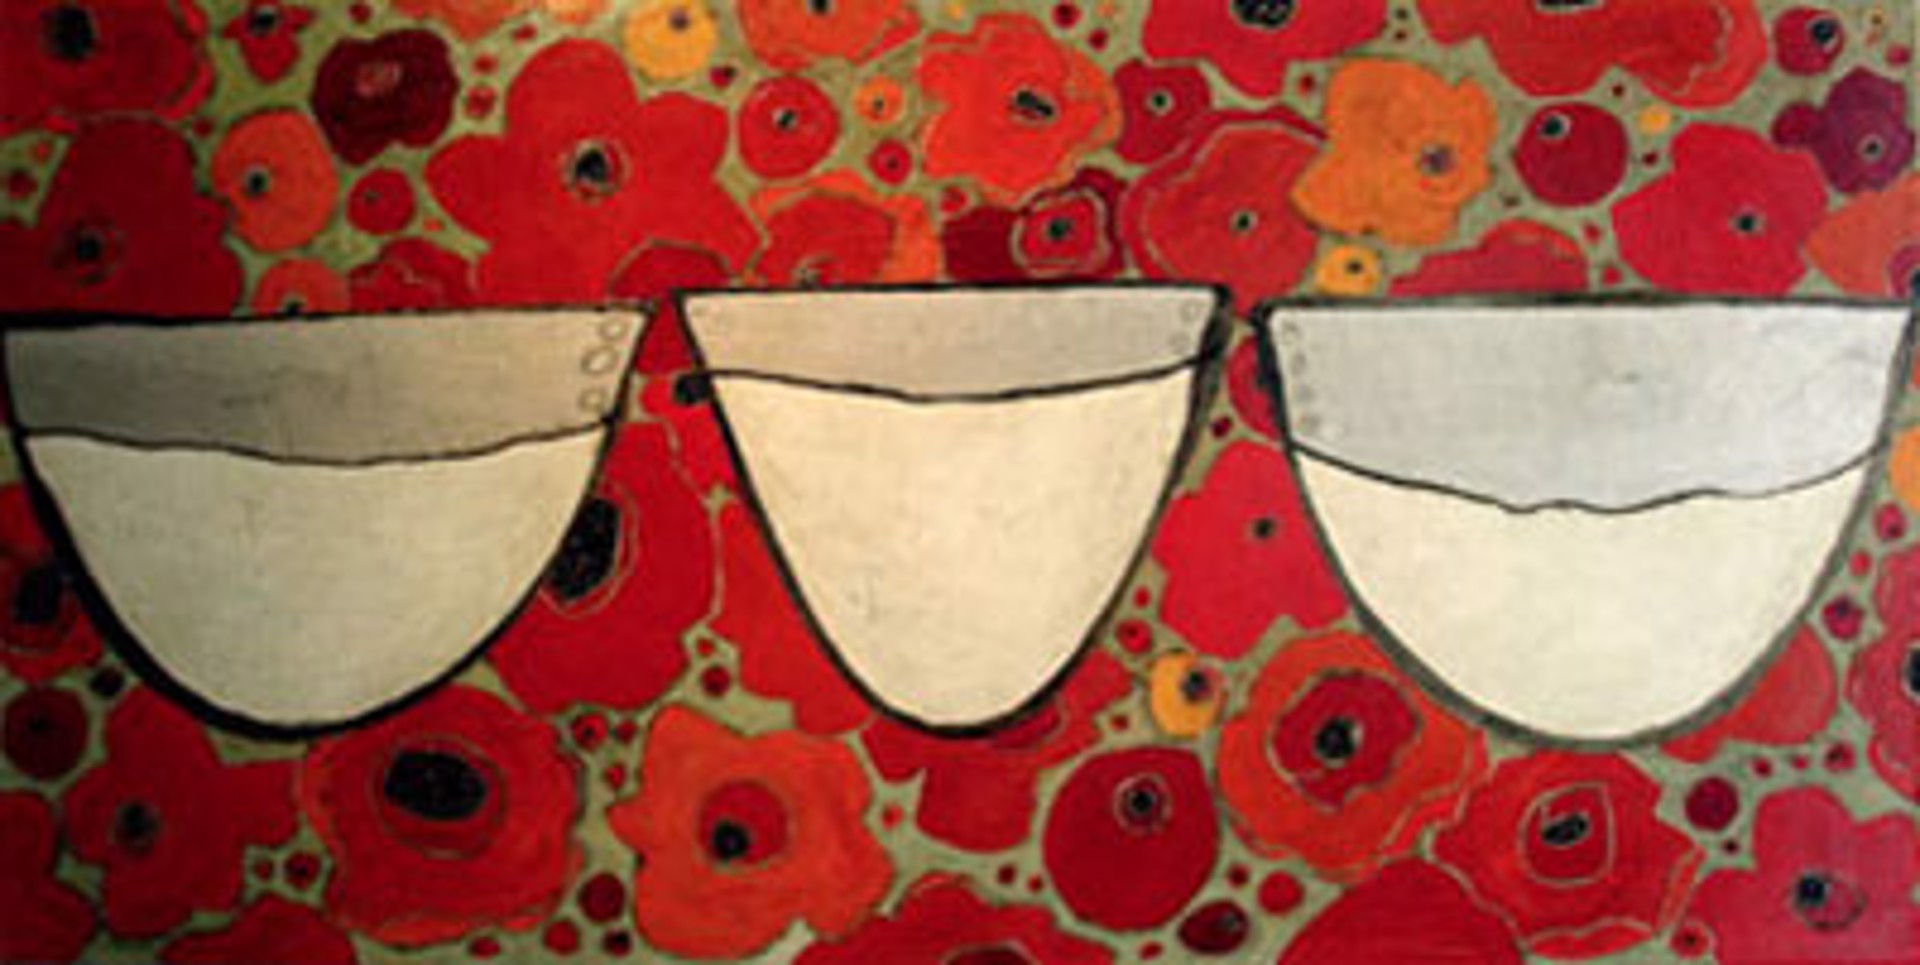 Three Bowls Over Poppies by Karen Tusinski